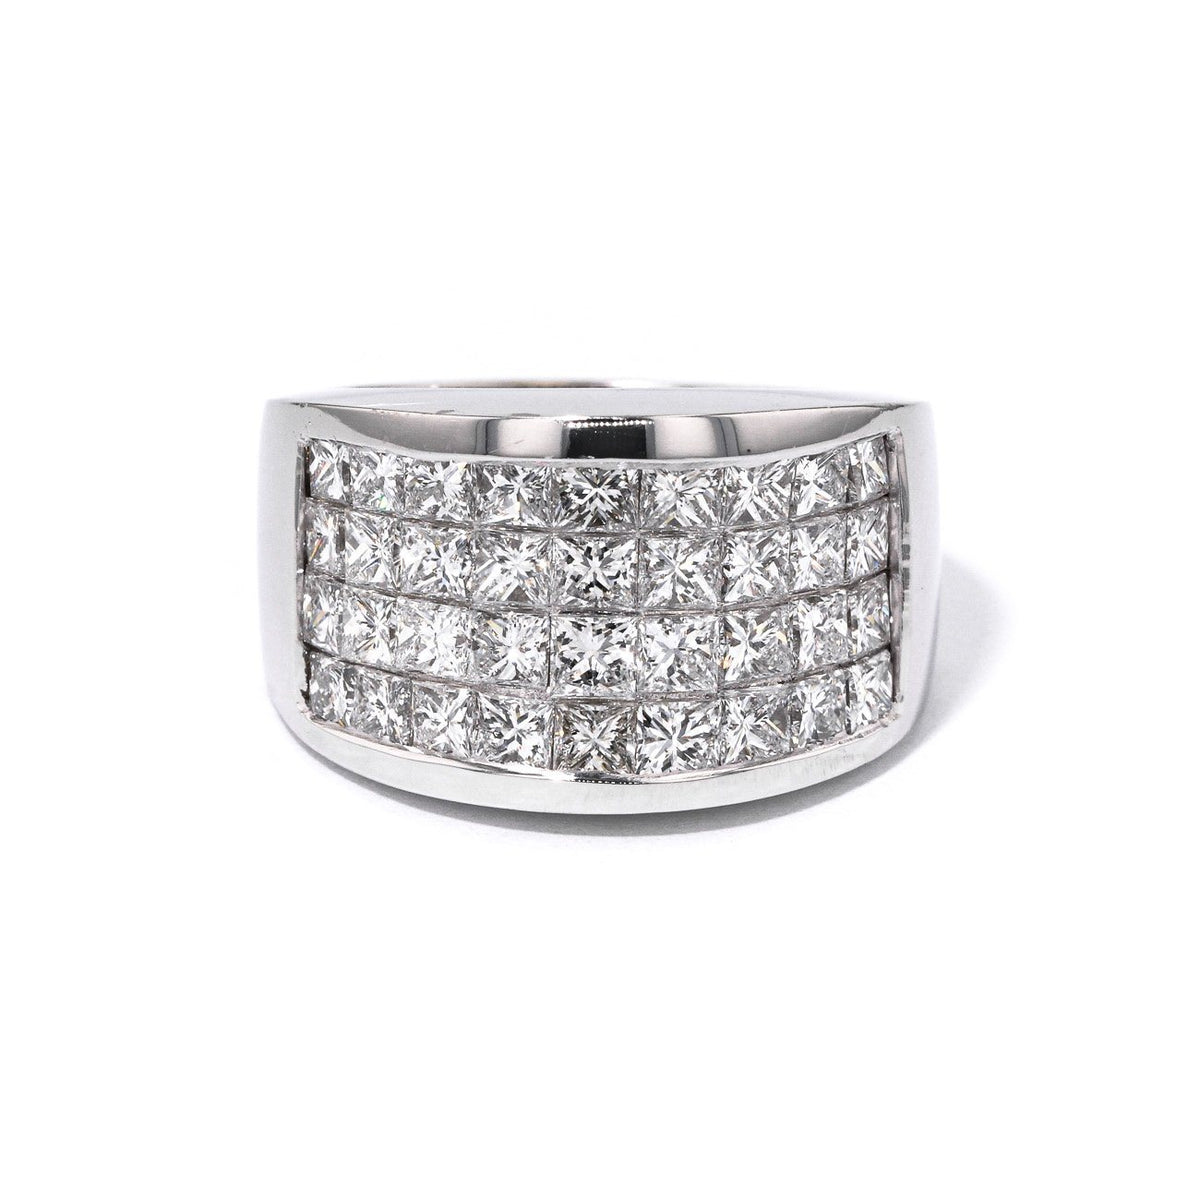 https://www.shopprincessbridediamonds.shop/wp-content/uploads/1696/12/four-row-princess-invisible-set-diamond-ring-princess-bride-diamonds_0.jpg